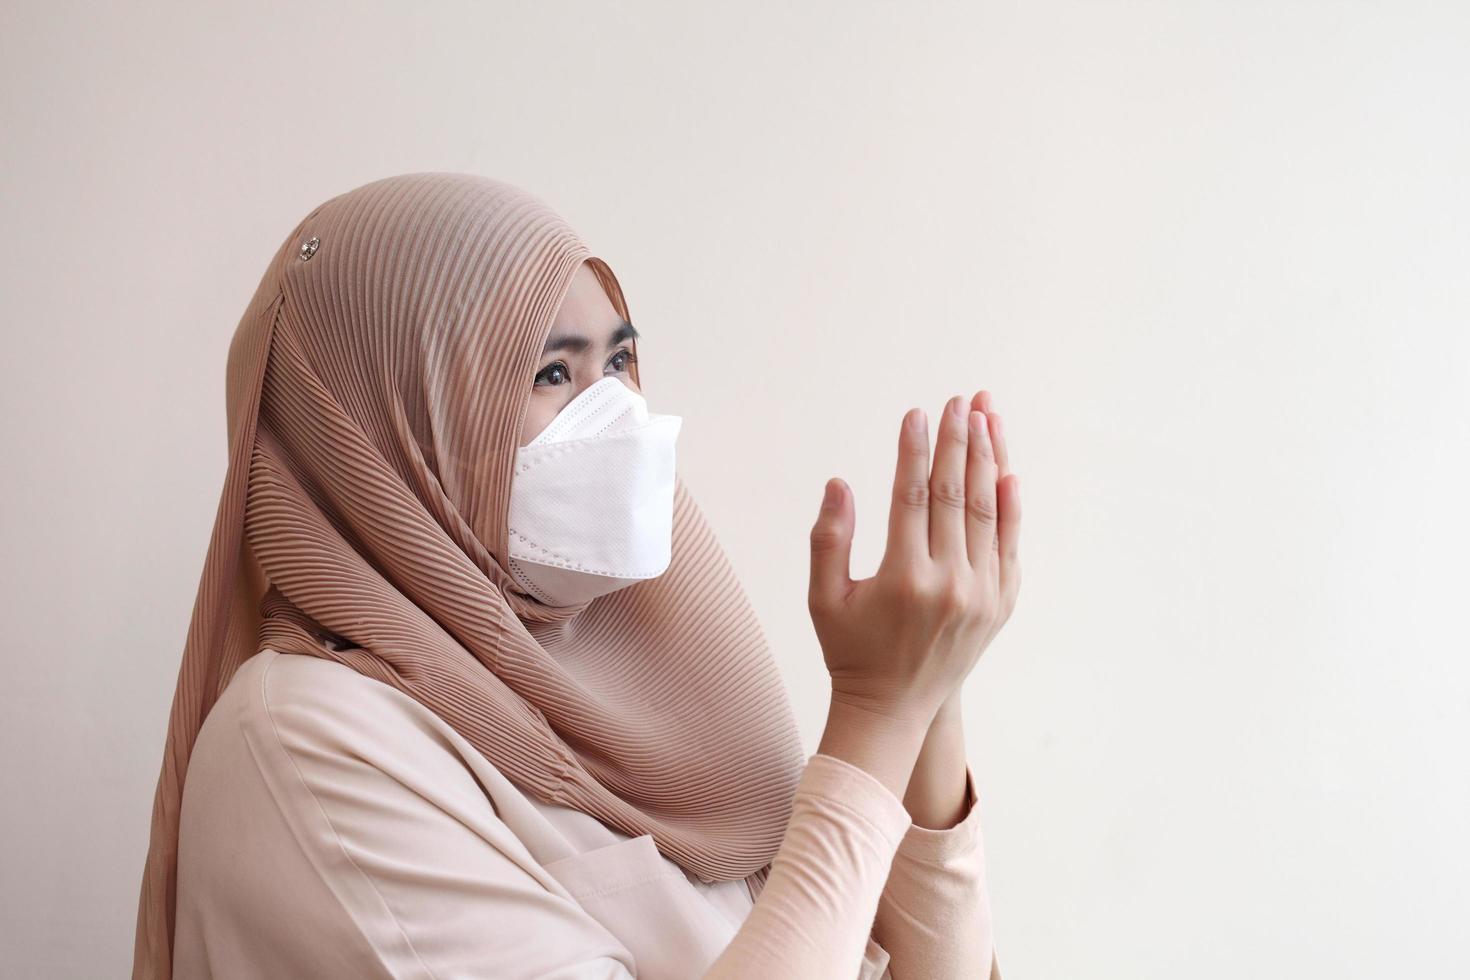 fille musulmane portant un masque chirurgical priant pendant le travail à domicile. concept de coronavirus covid-19. photo